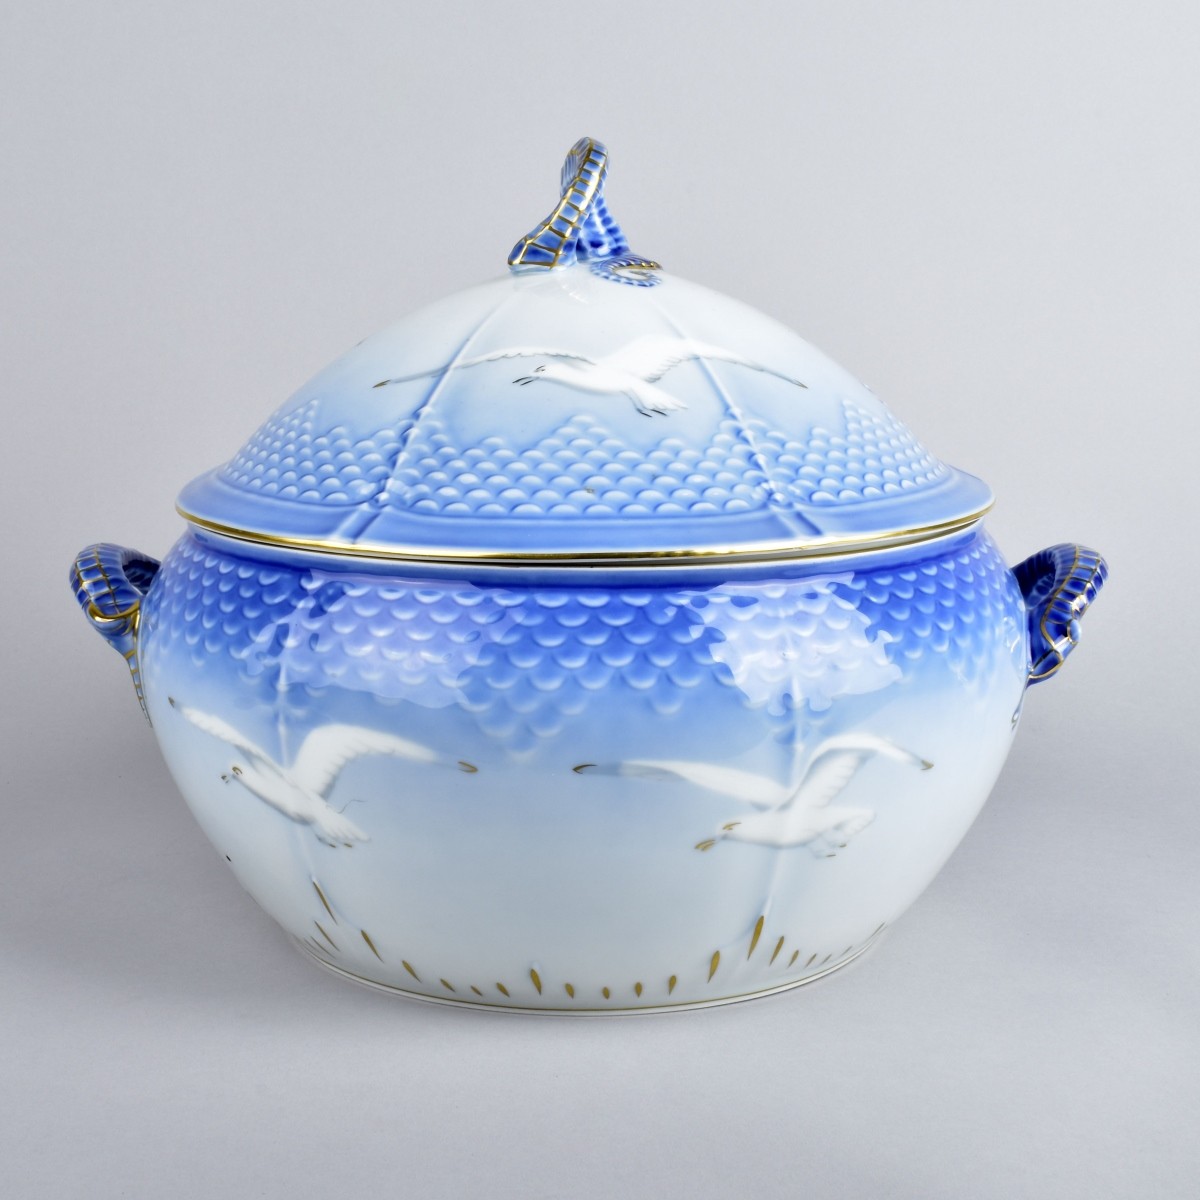 Bing & Grondahl (B&G) Porcelain Soup Tureen